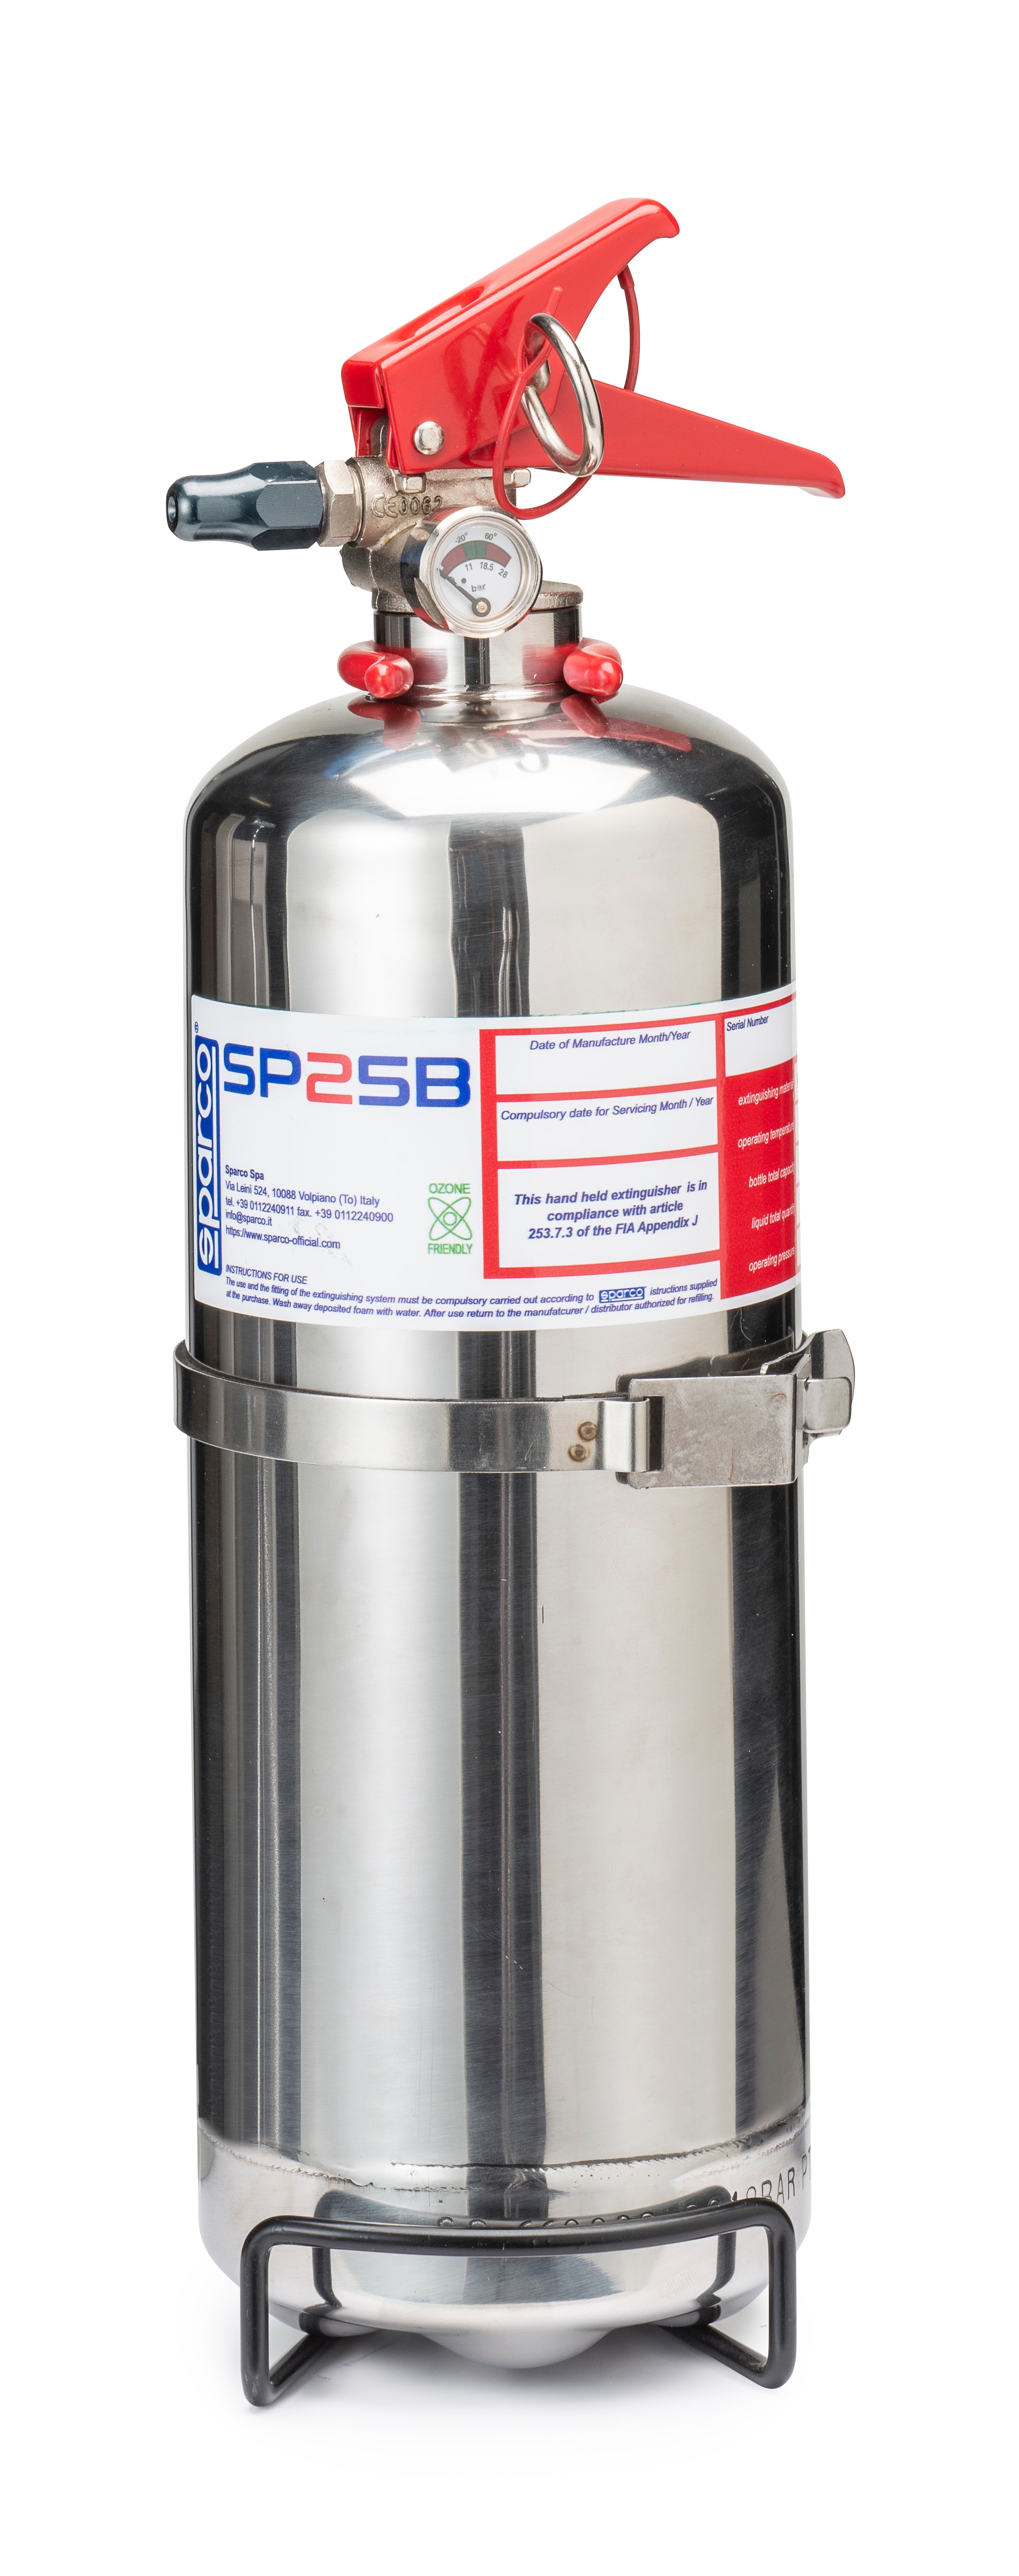 Sparco Fire Extinguisher FIA 2 lit